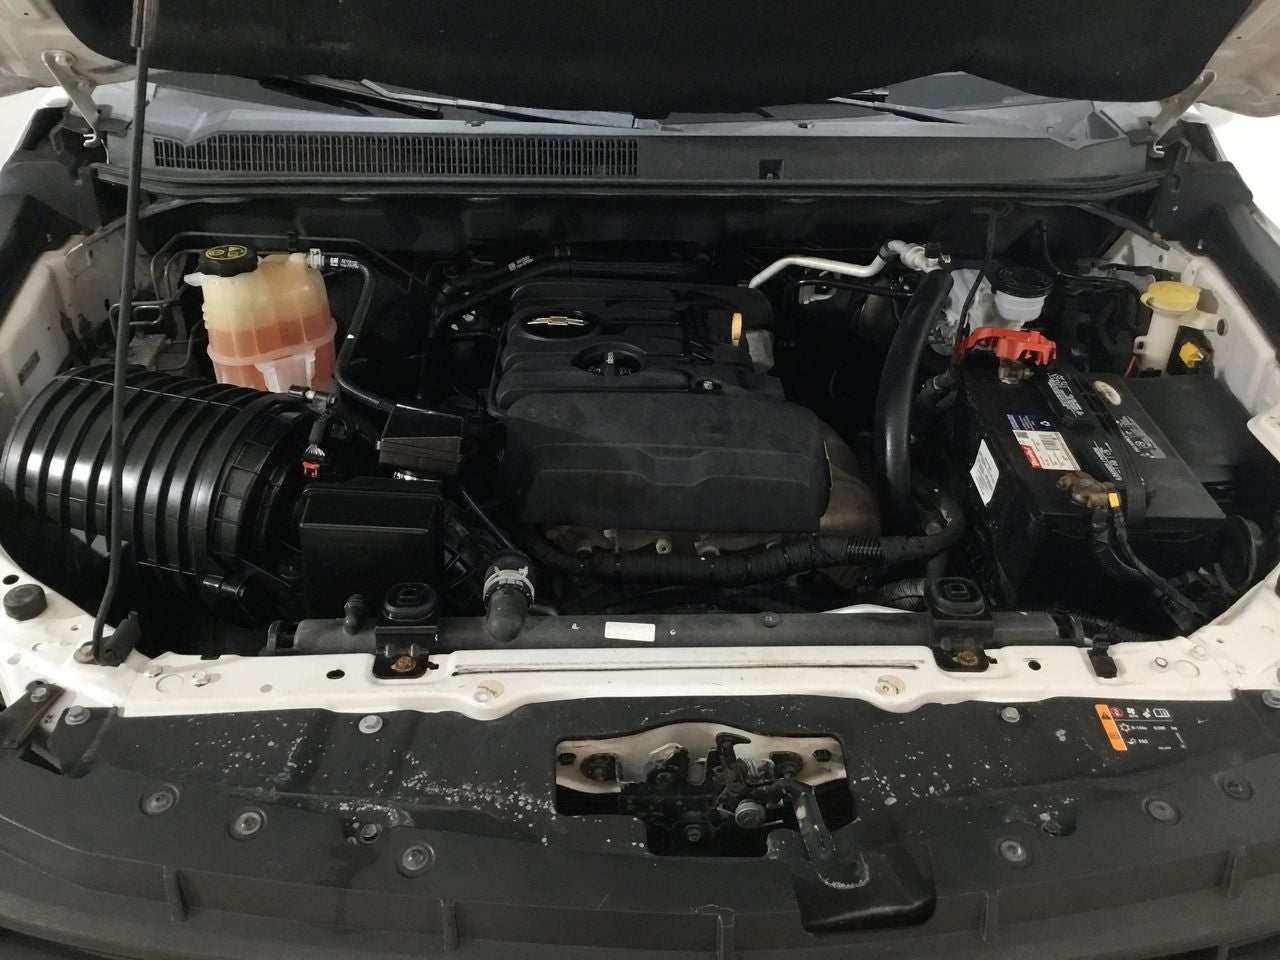 2017 Chevrolet S10 DOBLE CABINA, L4, 2.5L, 197 CP, 4 PUERTAS, STD